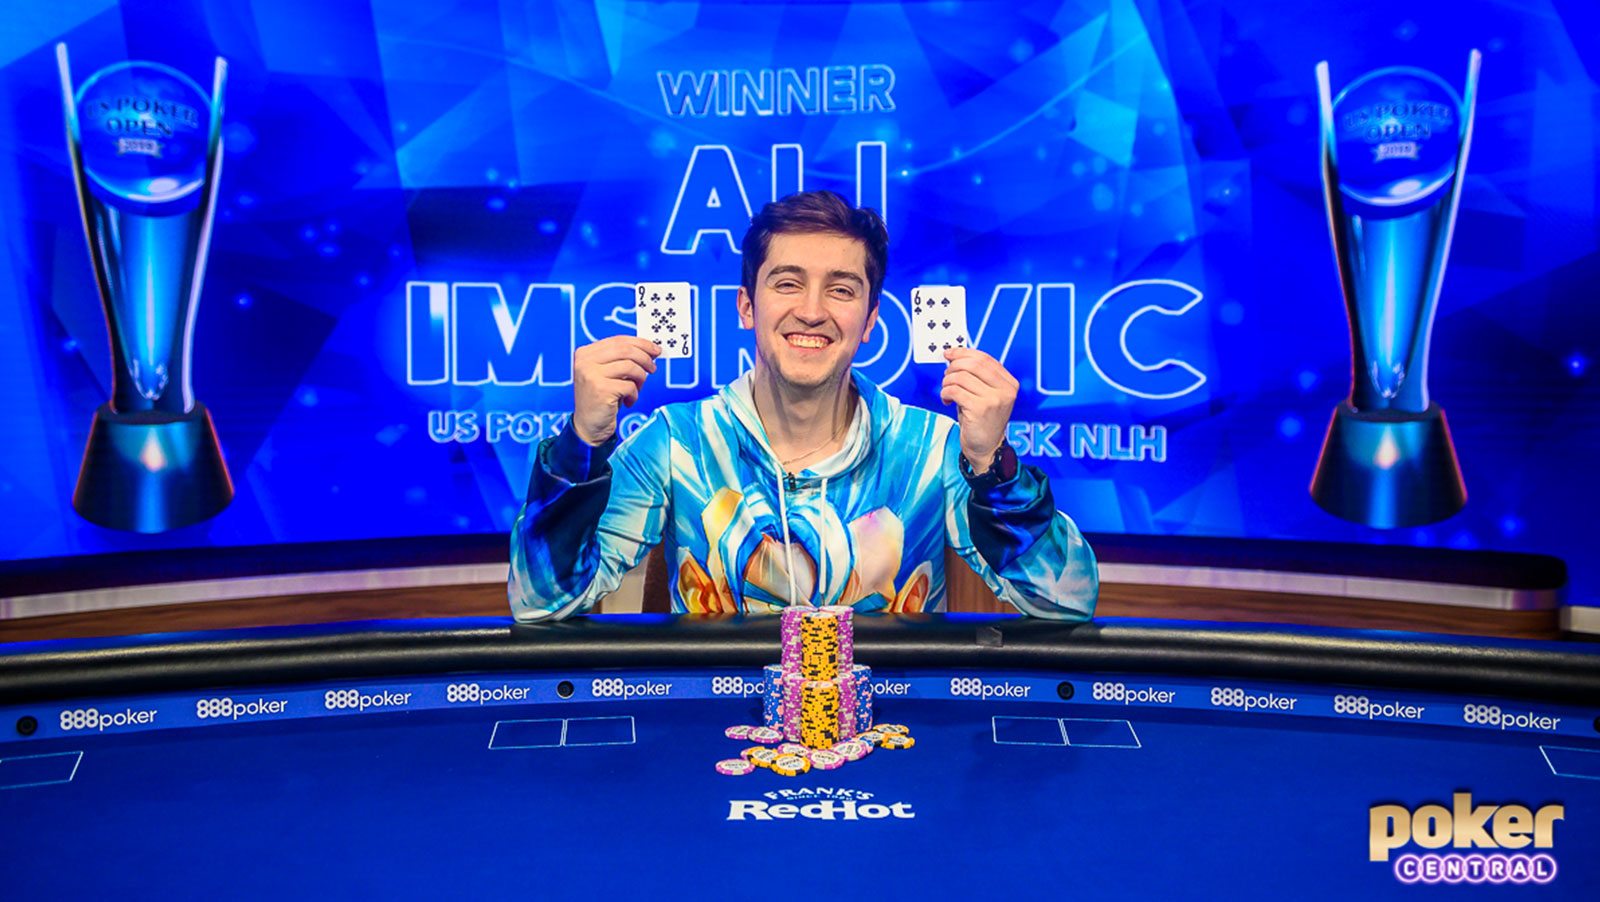 US Poker Open News: Ali Imsirovic Wins $25,000 No-Limit Hold’em